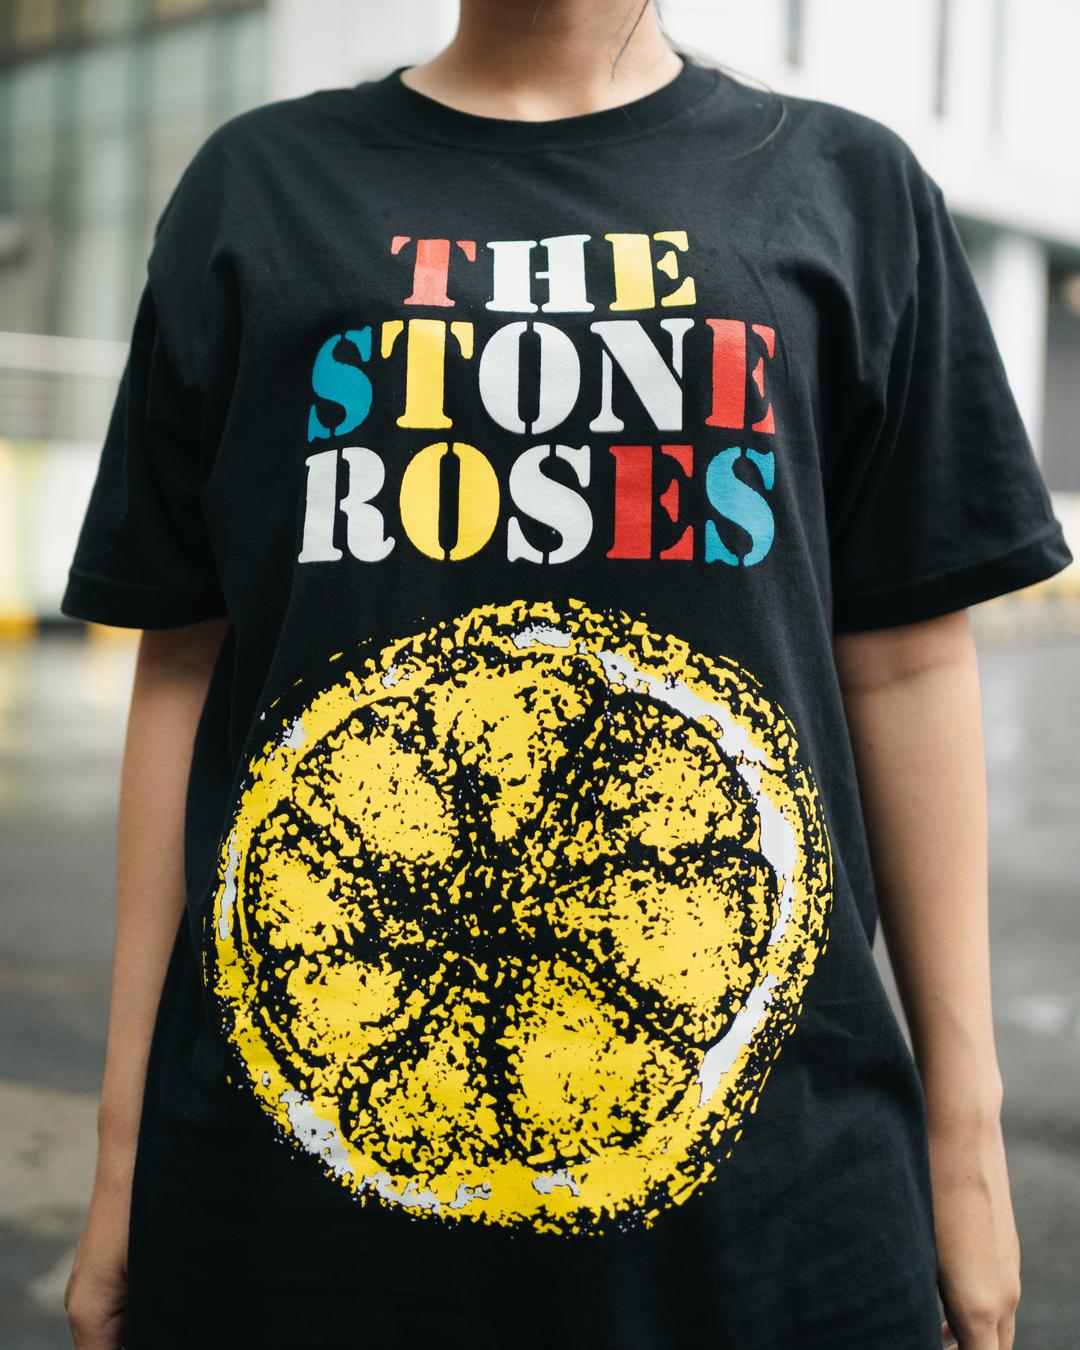 Tshirt Badkids Store "The Stone Roses" Black